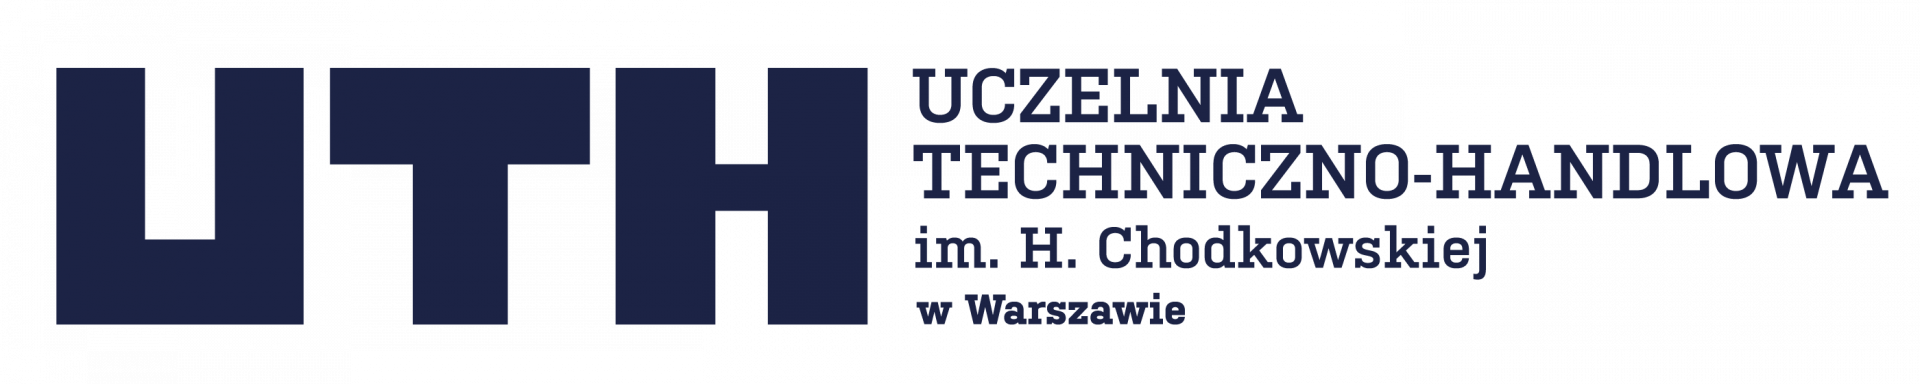 Helena Chodkowska University of Technology and Economics Poland